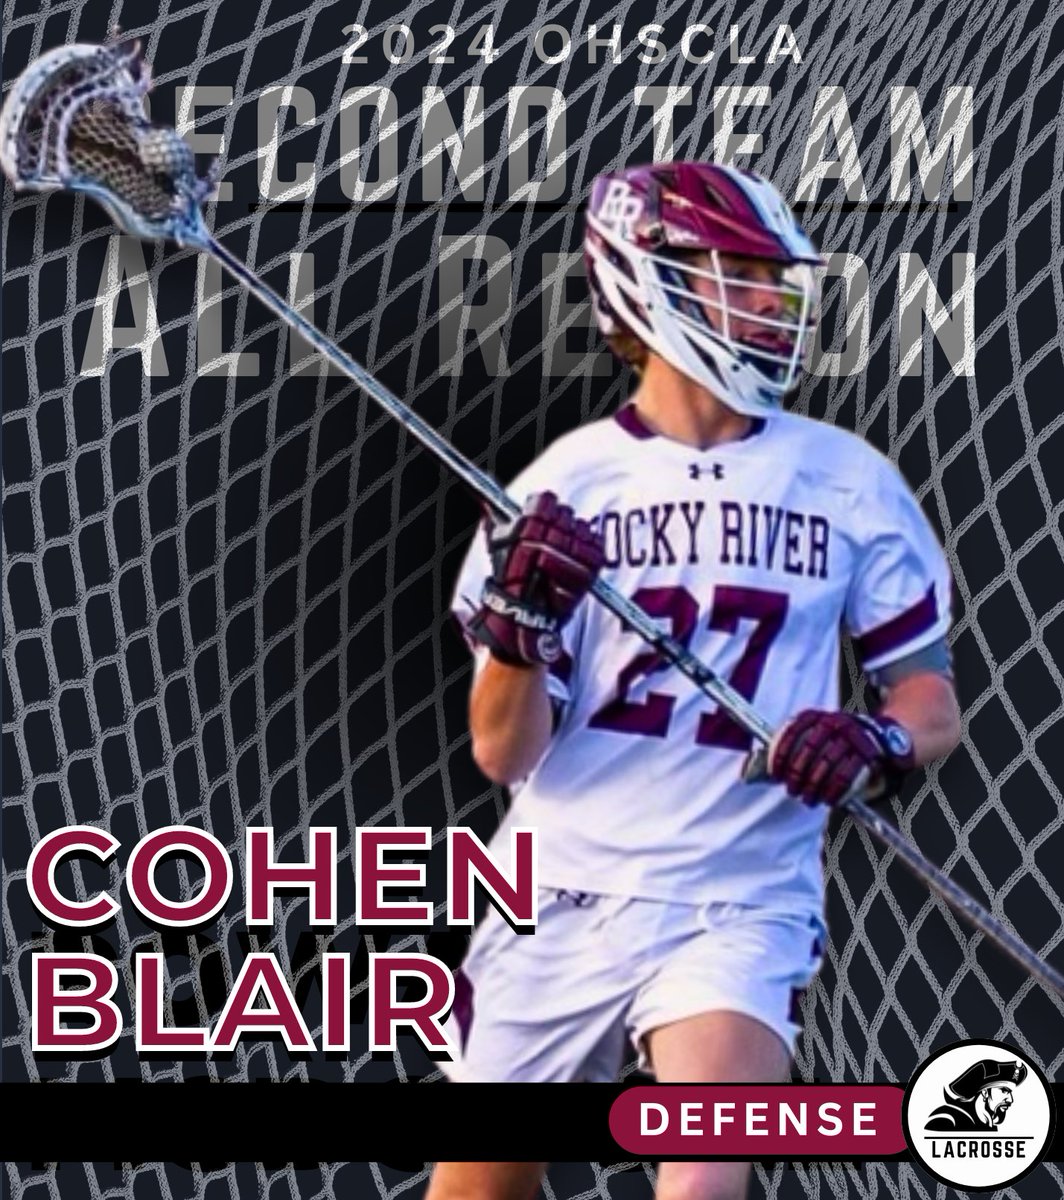 Congratulations Class of 2026 Defenseman Cohen Blair as being named Second Team All Region!